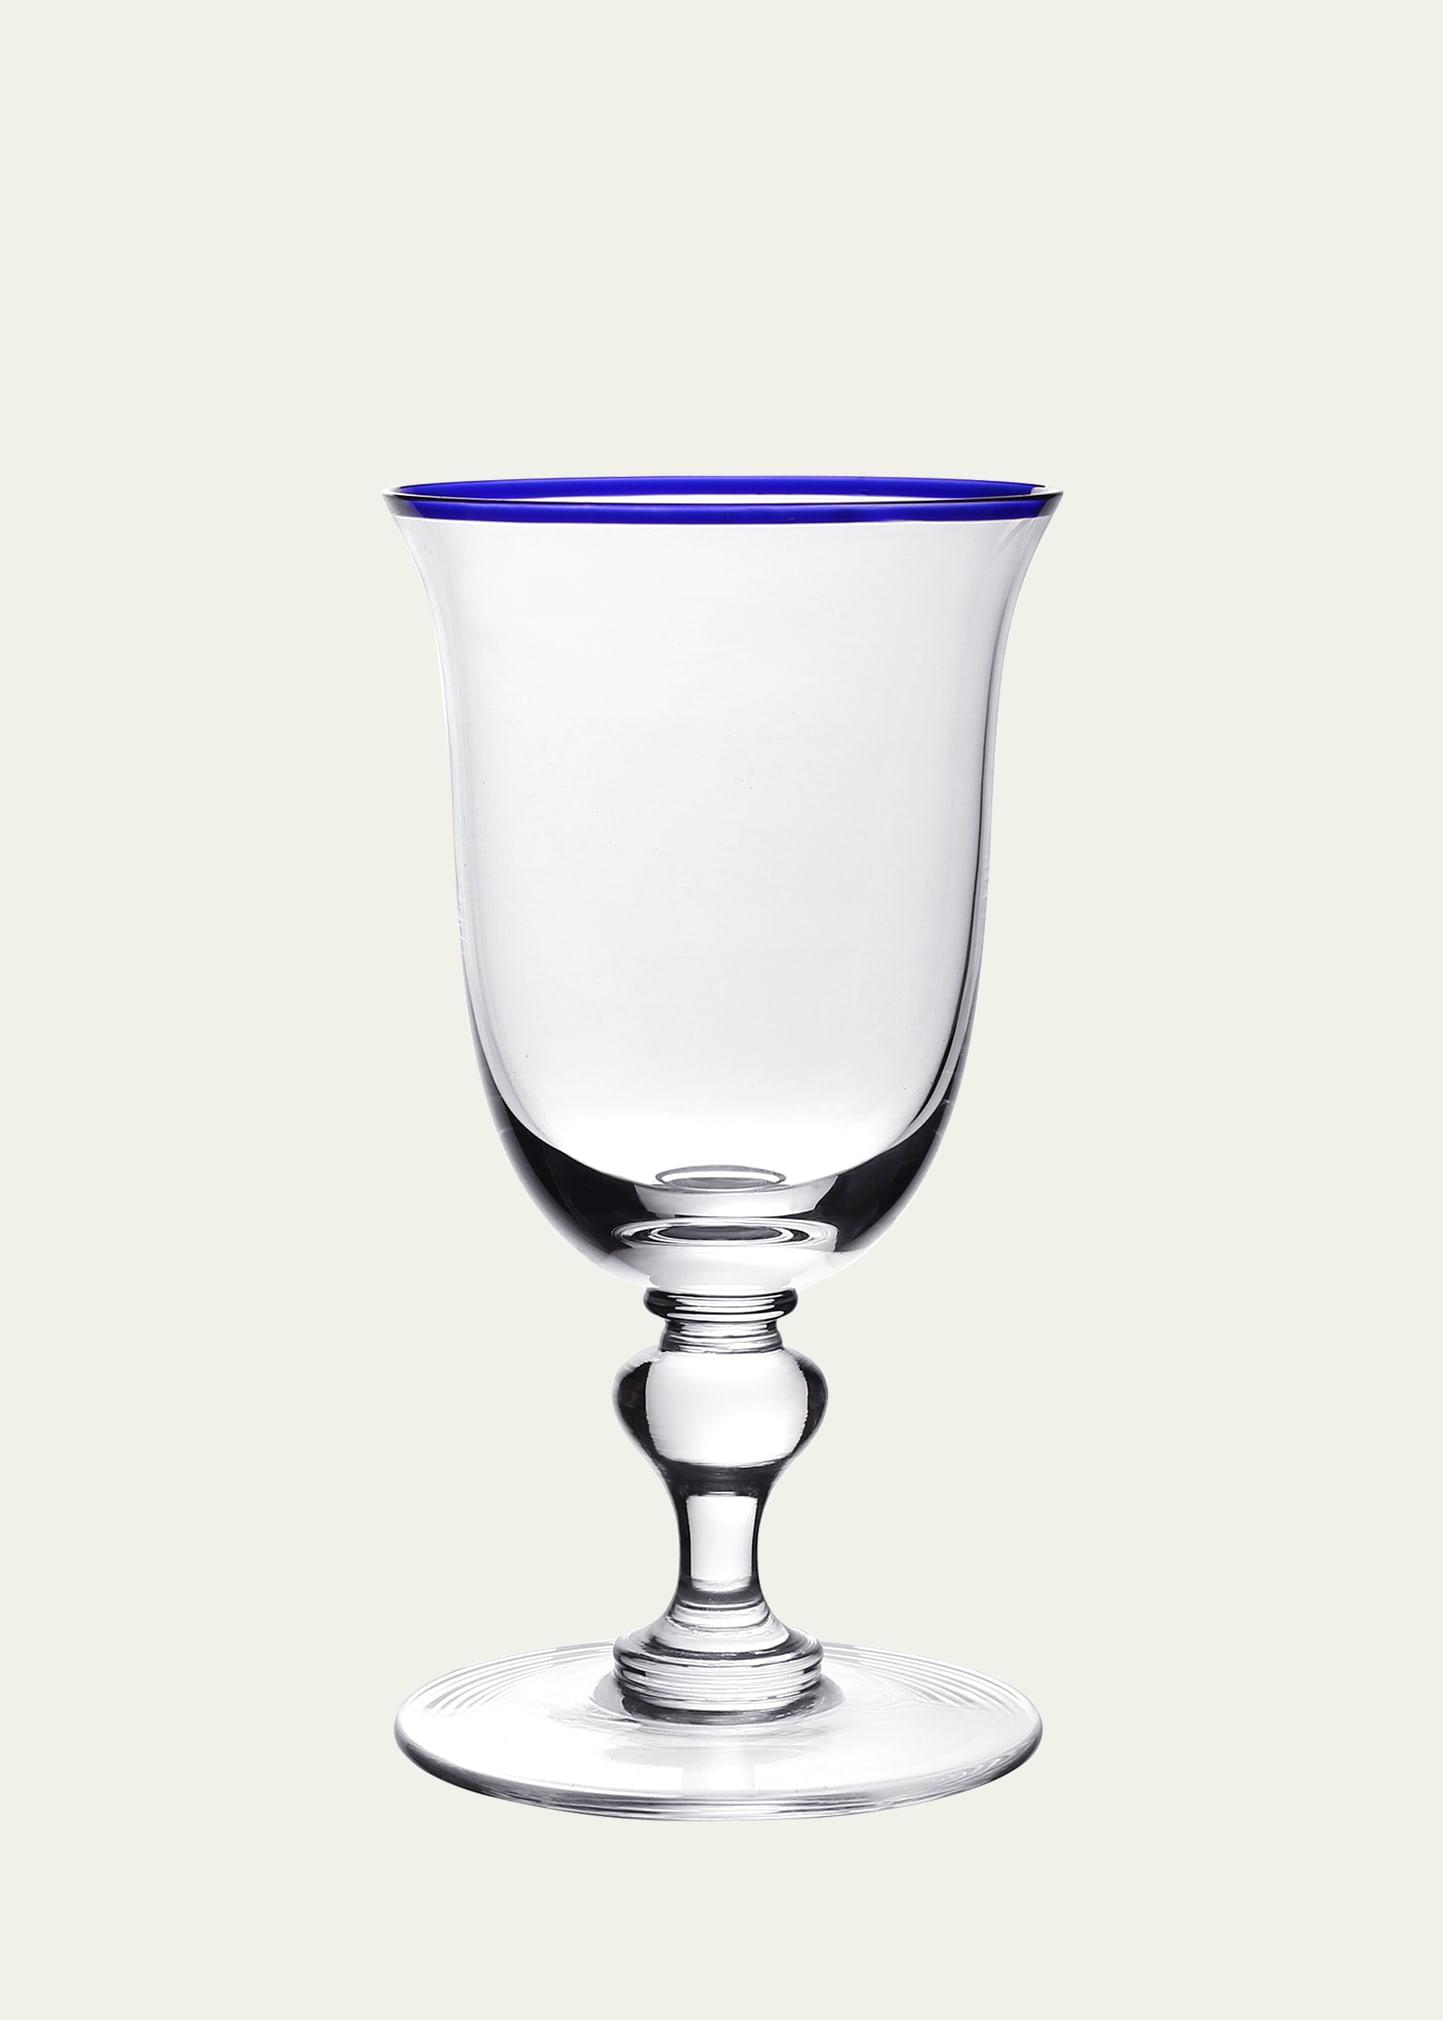 Siena Blue Wine Glass, Set of 2